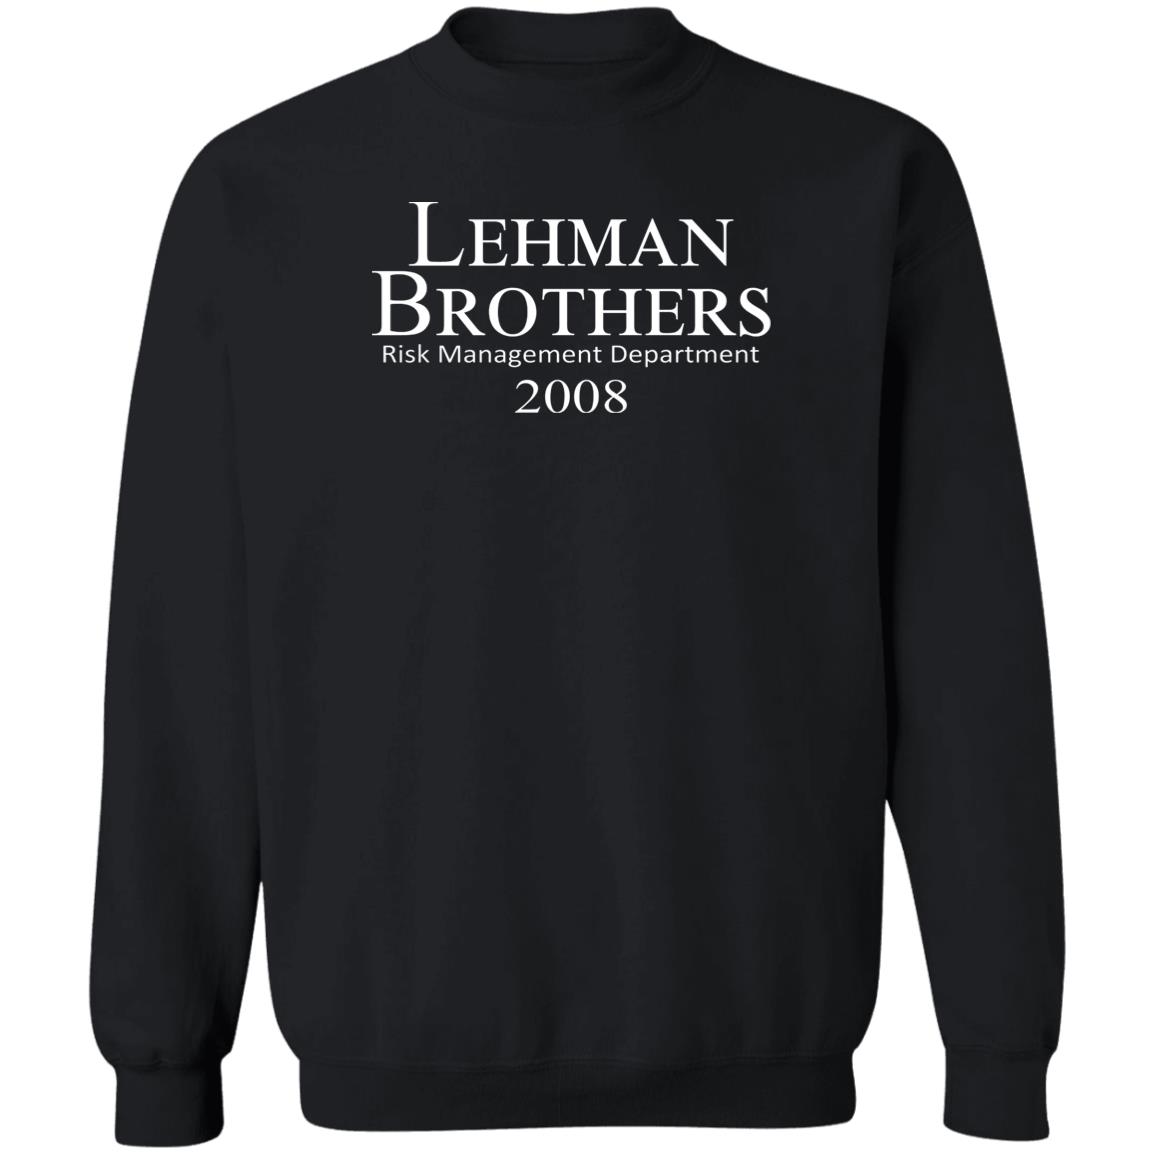 Lehman Brothers Risk Management Department 2008 Shirt 2